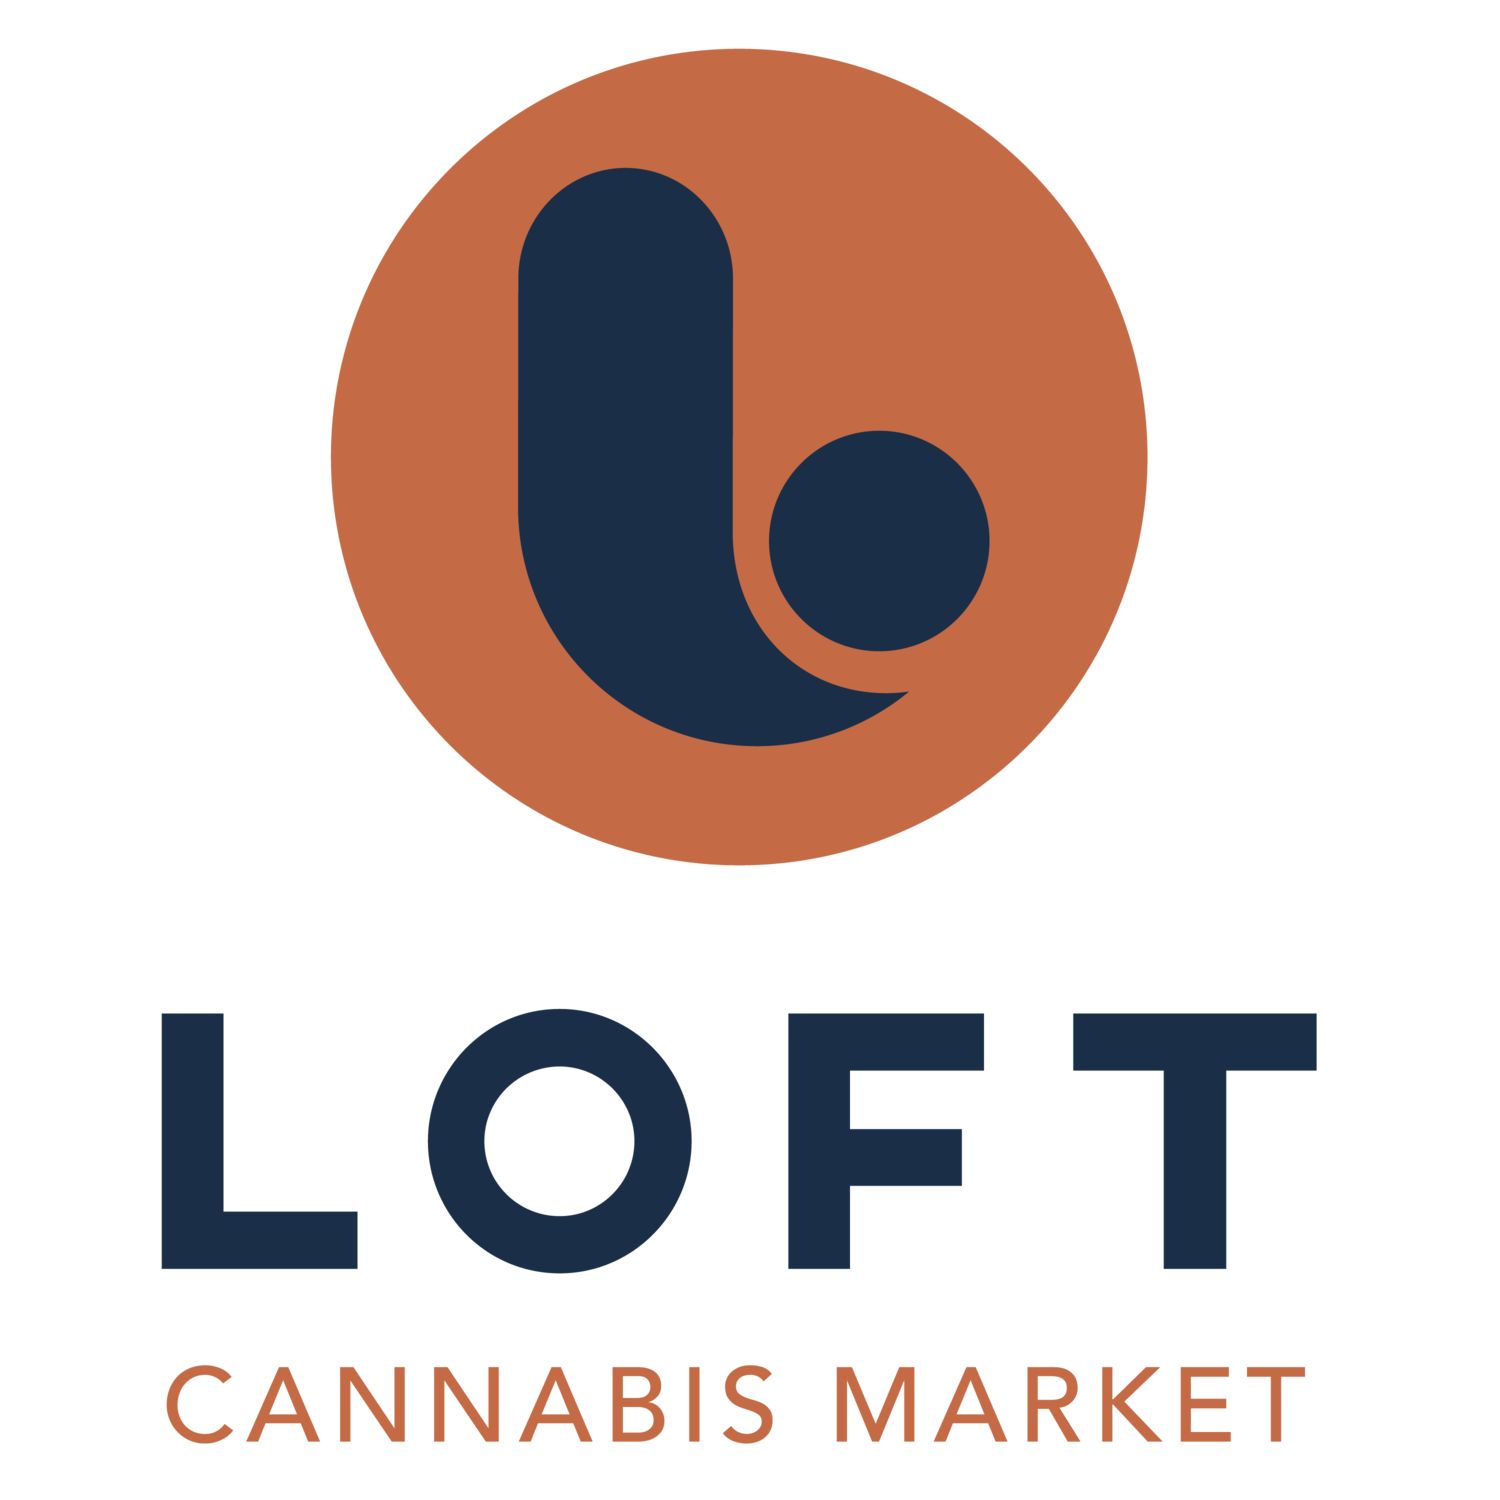 LOFT Cannabis Market